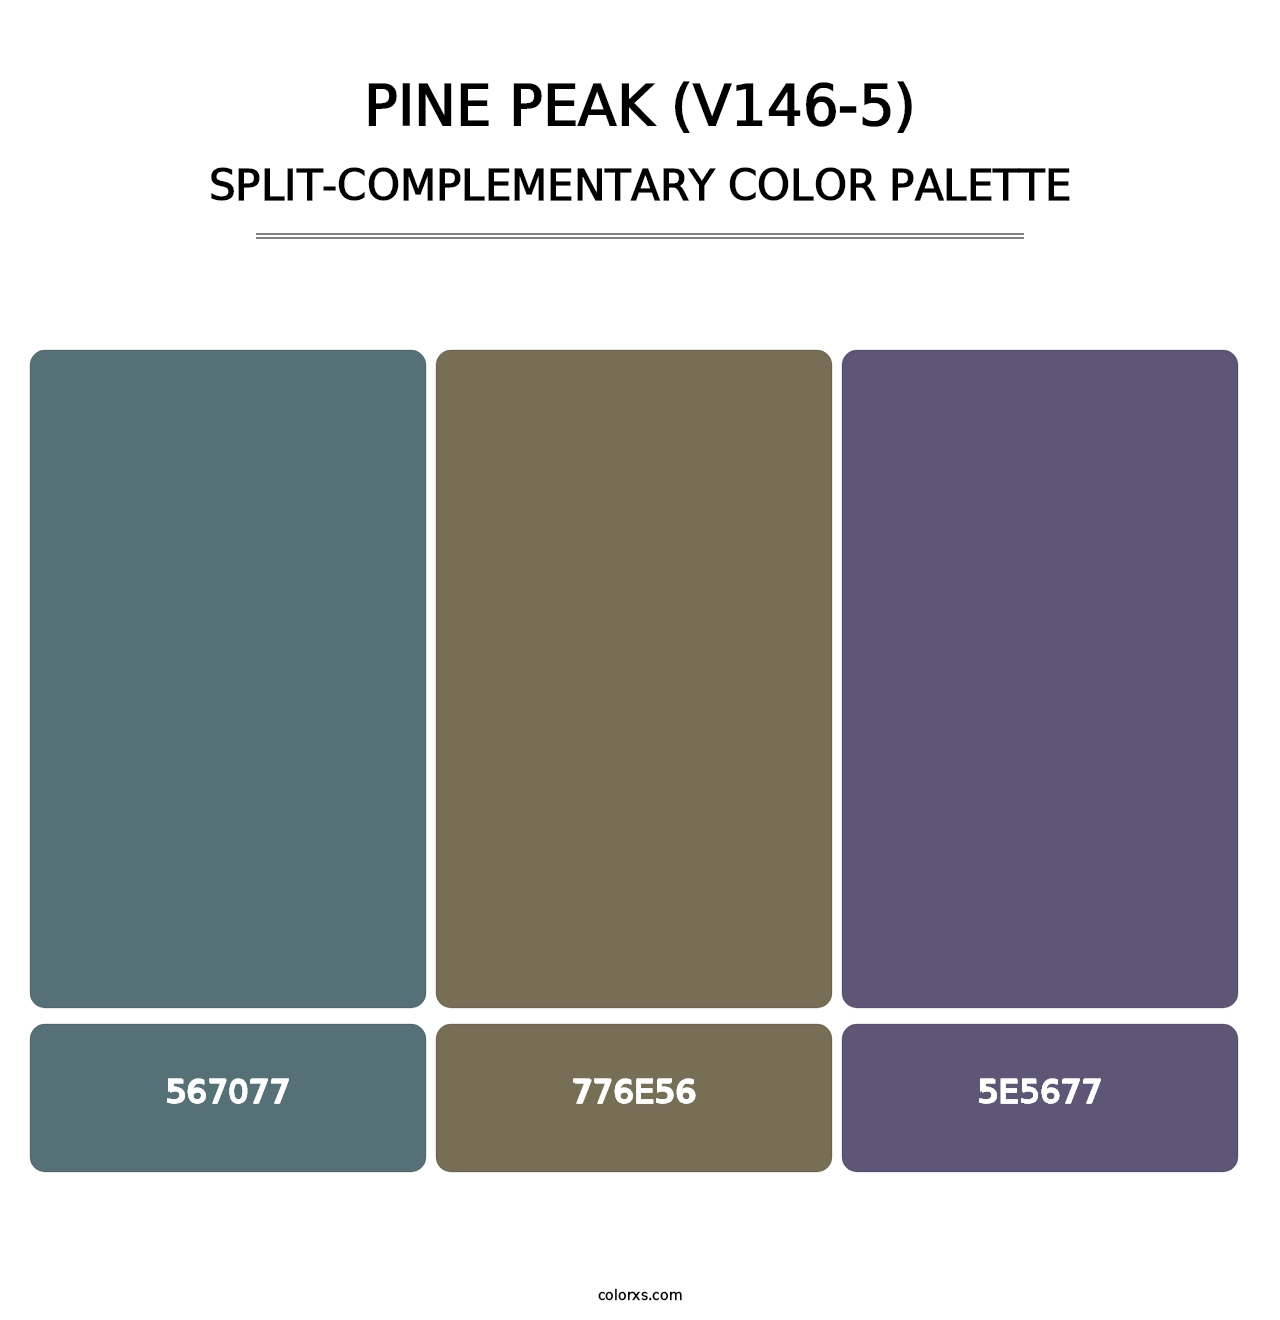 Pine Peak (V146-5) - Split-Complementary Color Palette